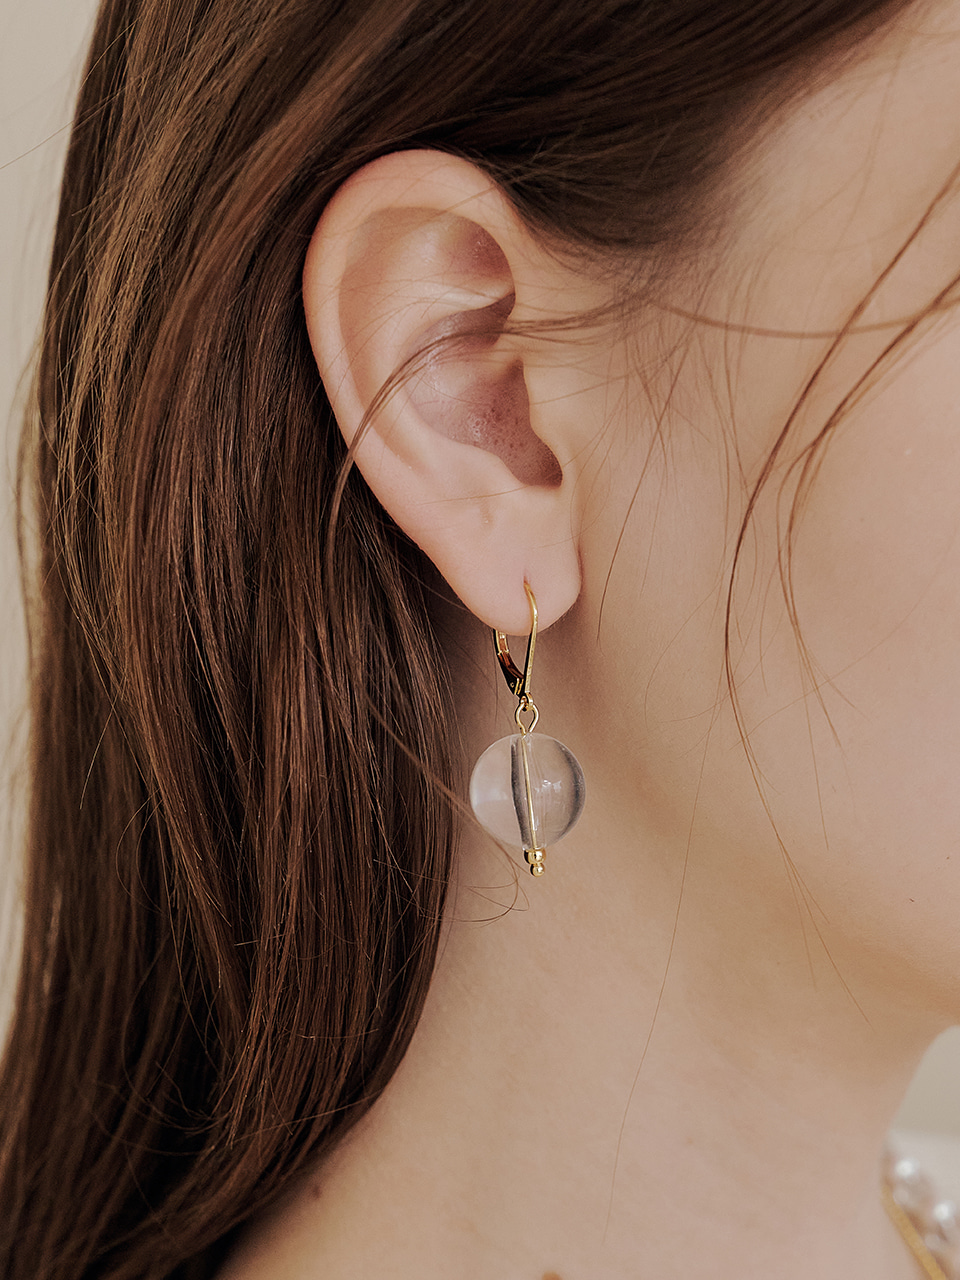 waterball earring